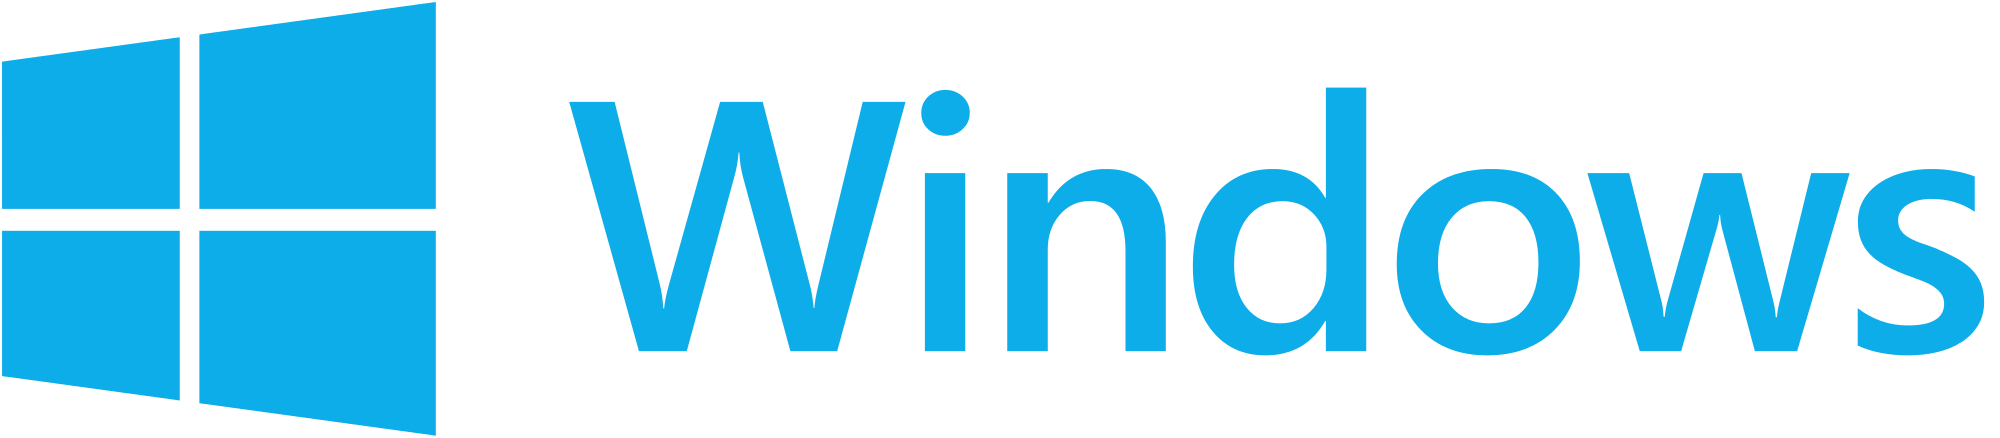 Windows logo png. And name transparent stickpng